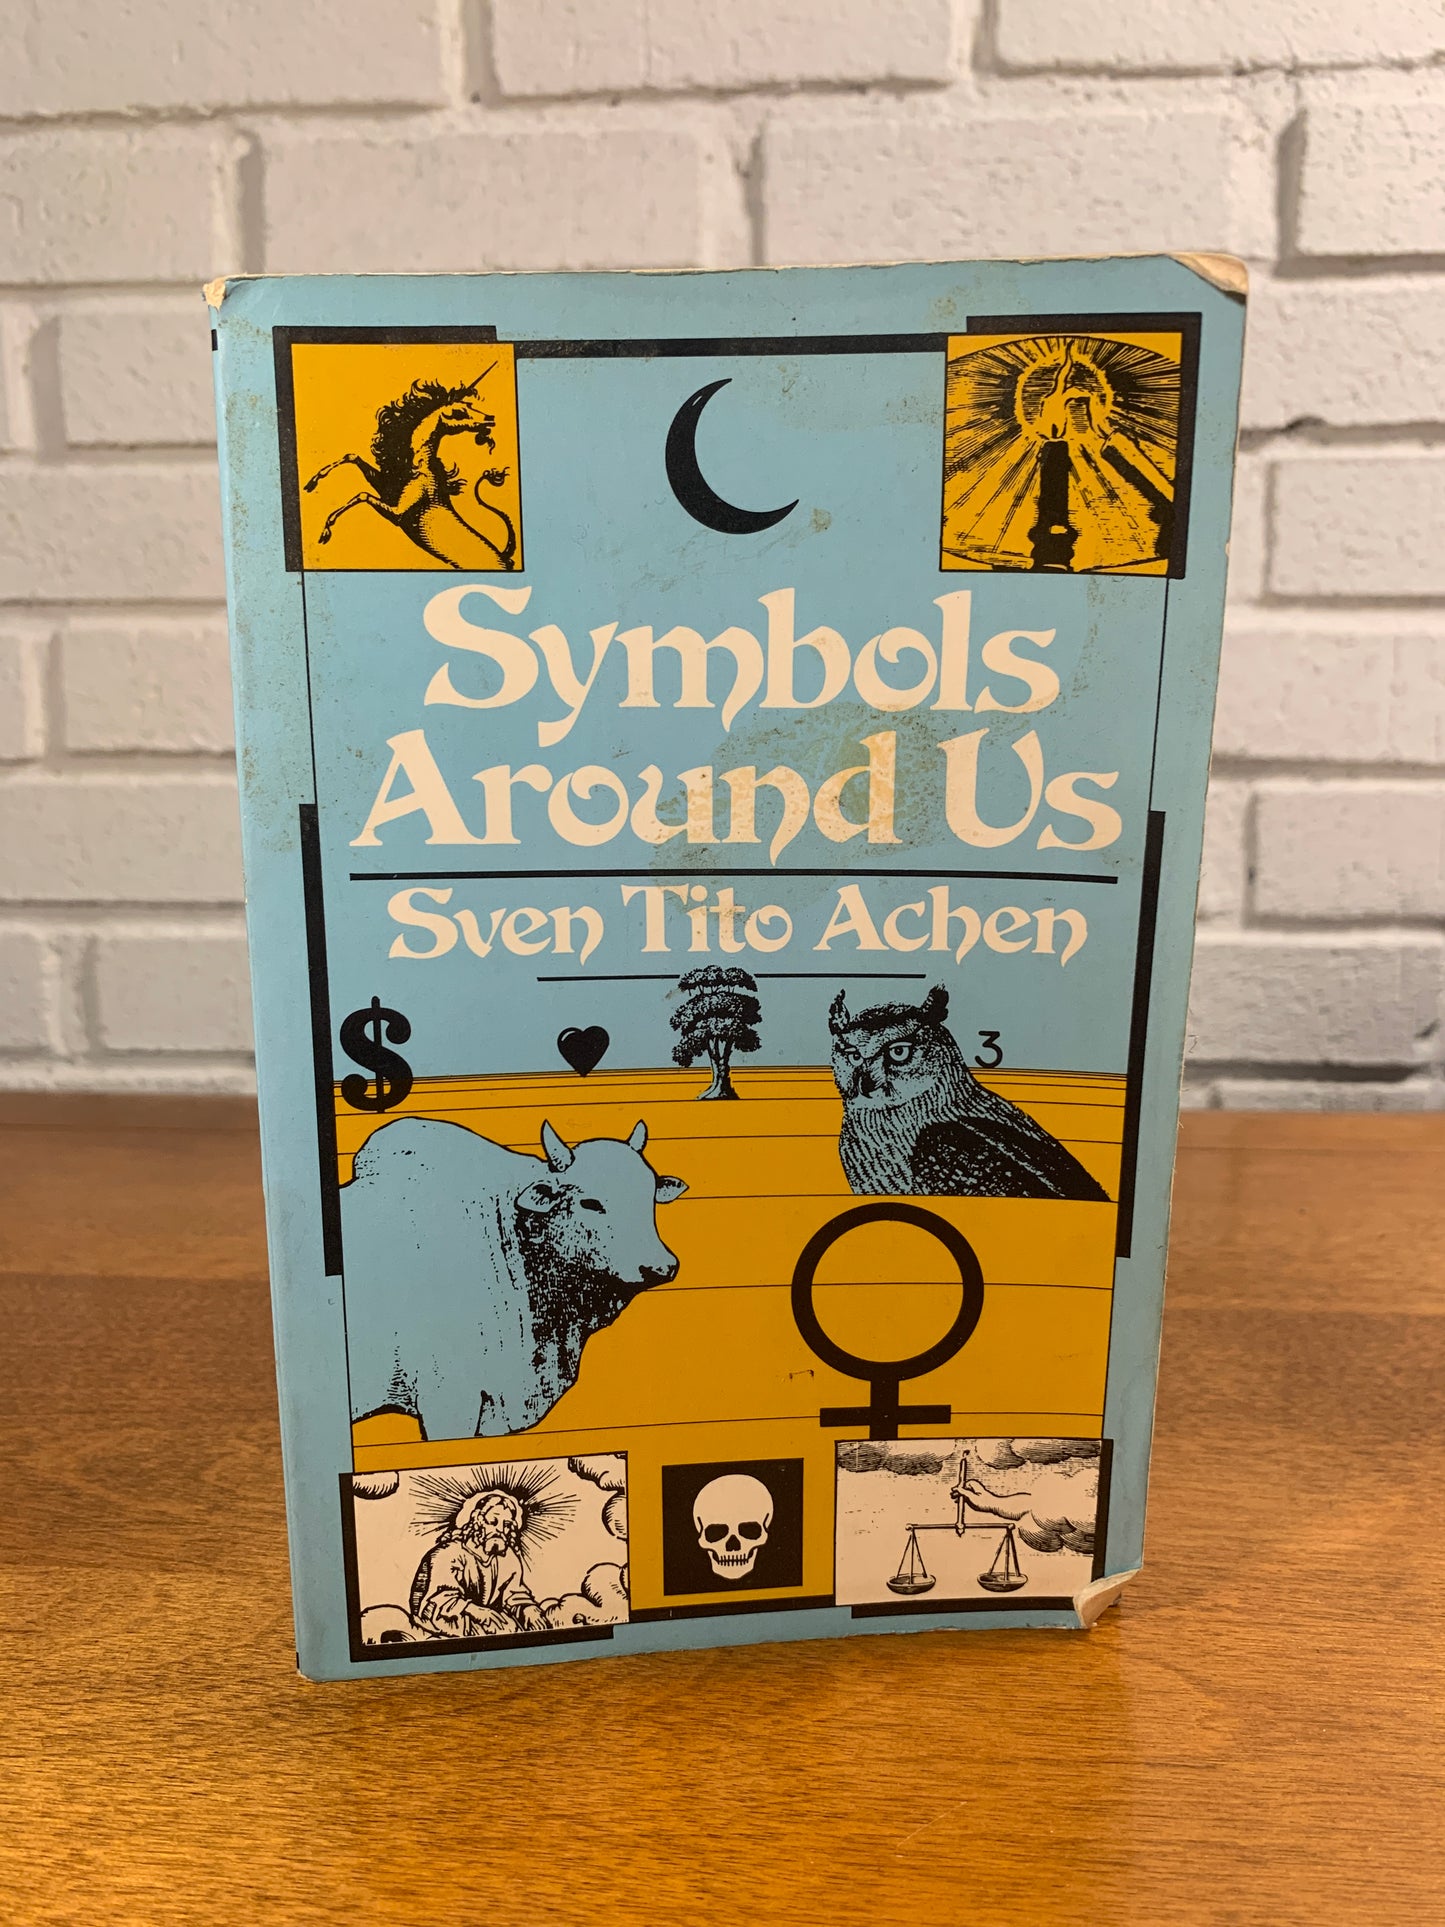 Symbols Around Us by Sven Tito Achen, 1981